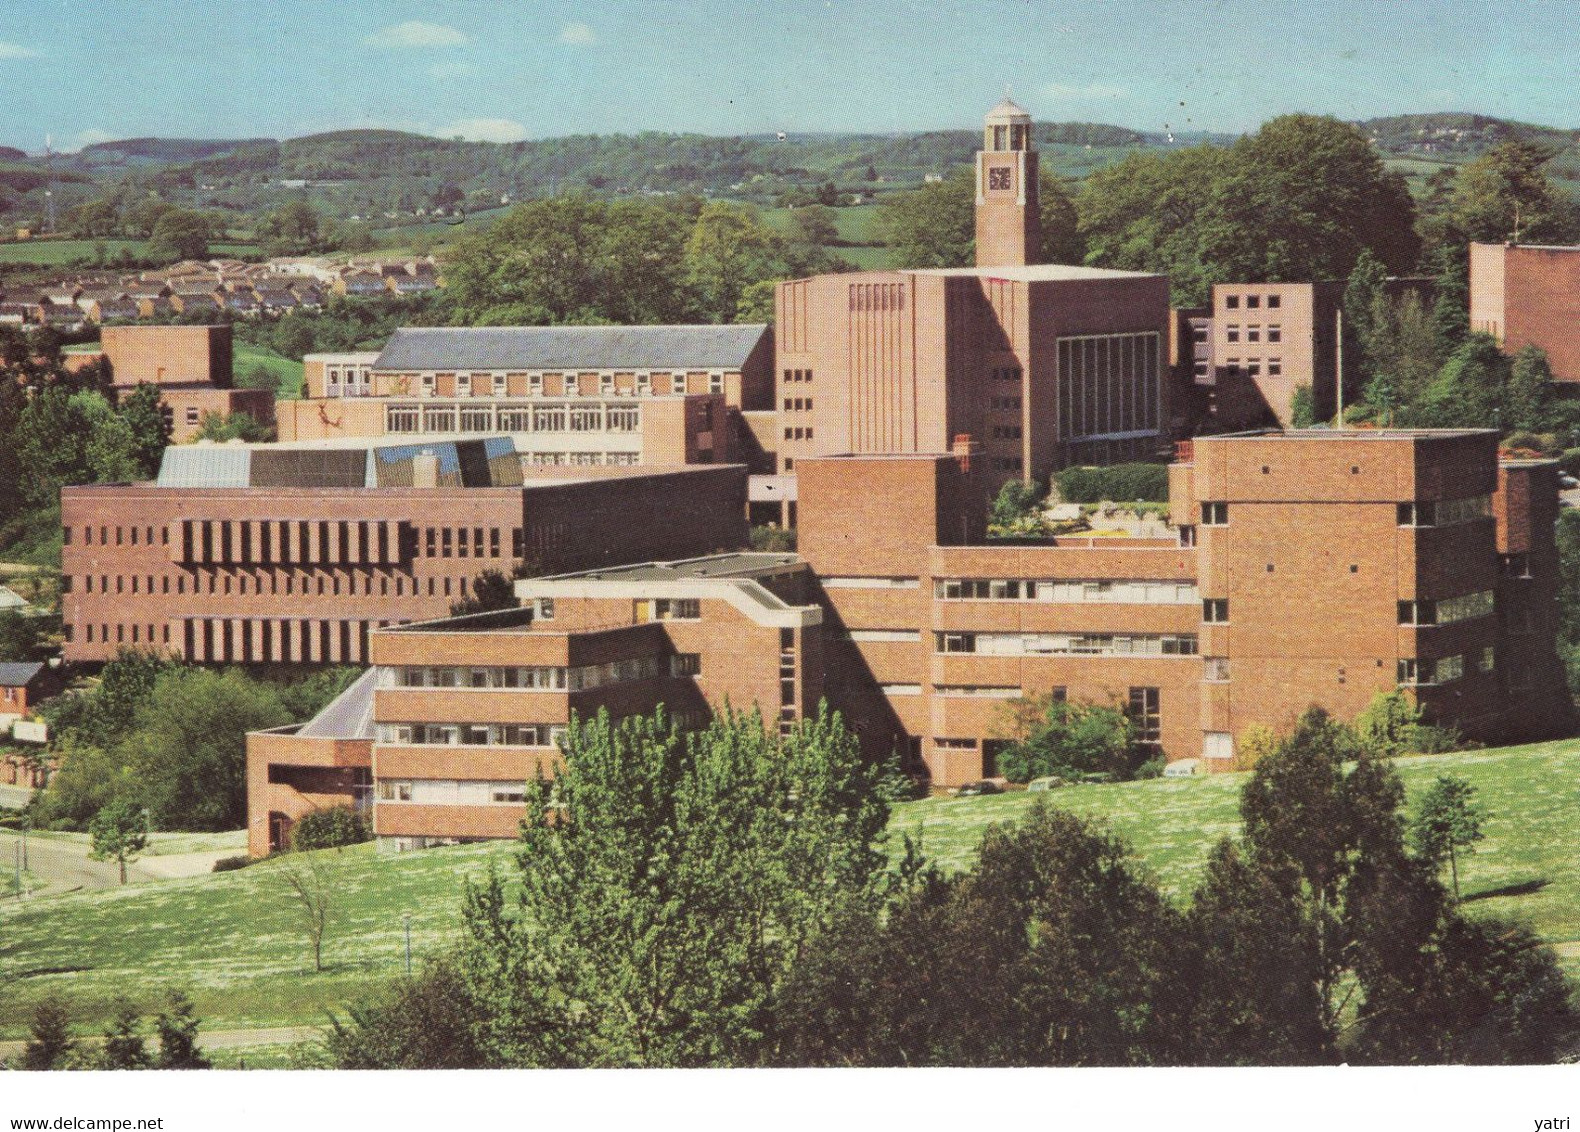 Università Di Exeter  - Viaggiata Per La Francia (1987) - Exeter